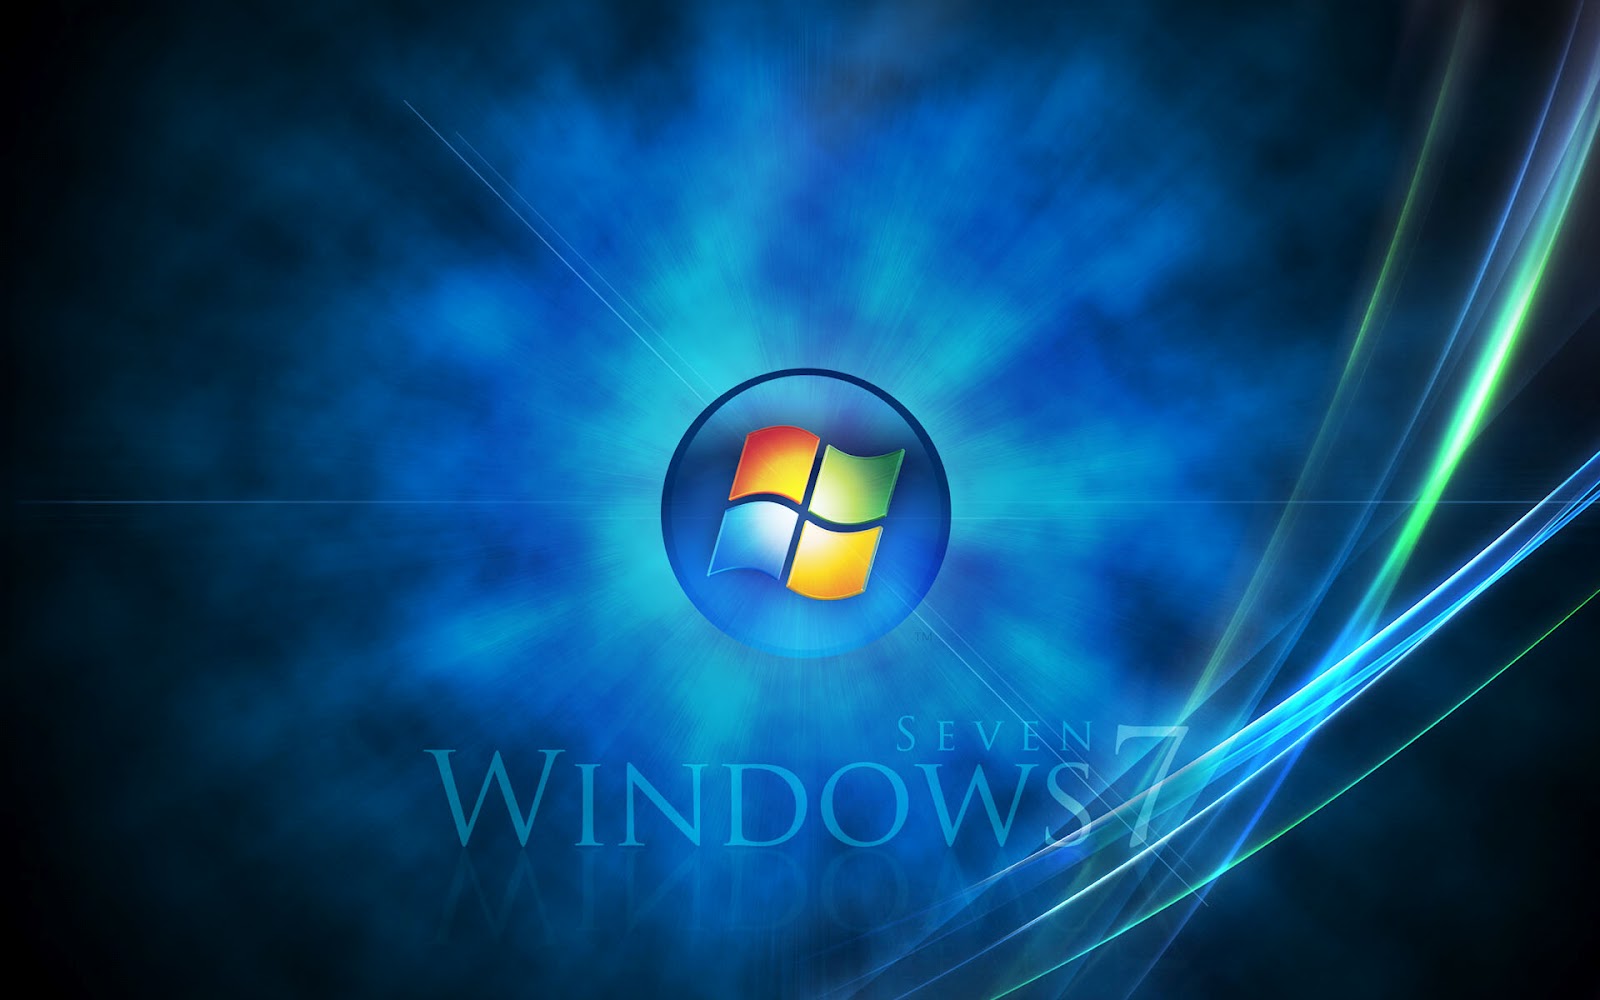 Windows Desktop Backgrounds Free Desktop Backgrounds for Windows